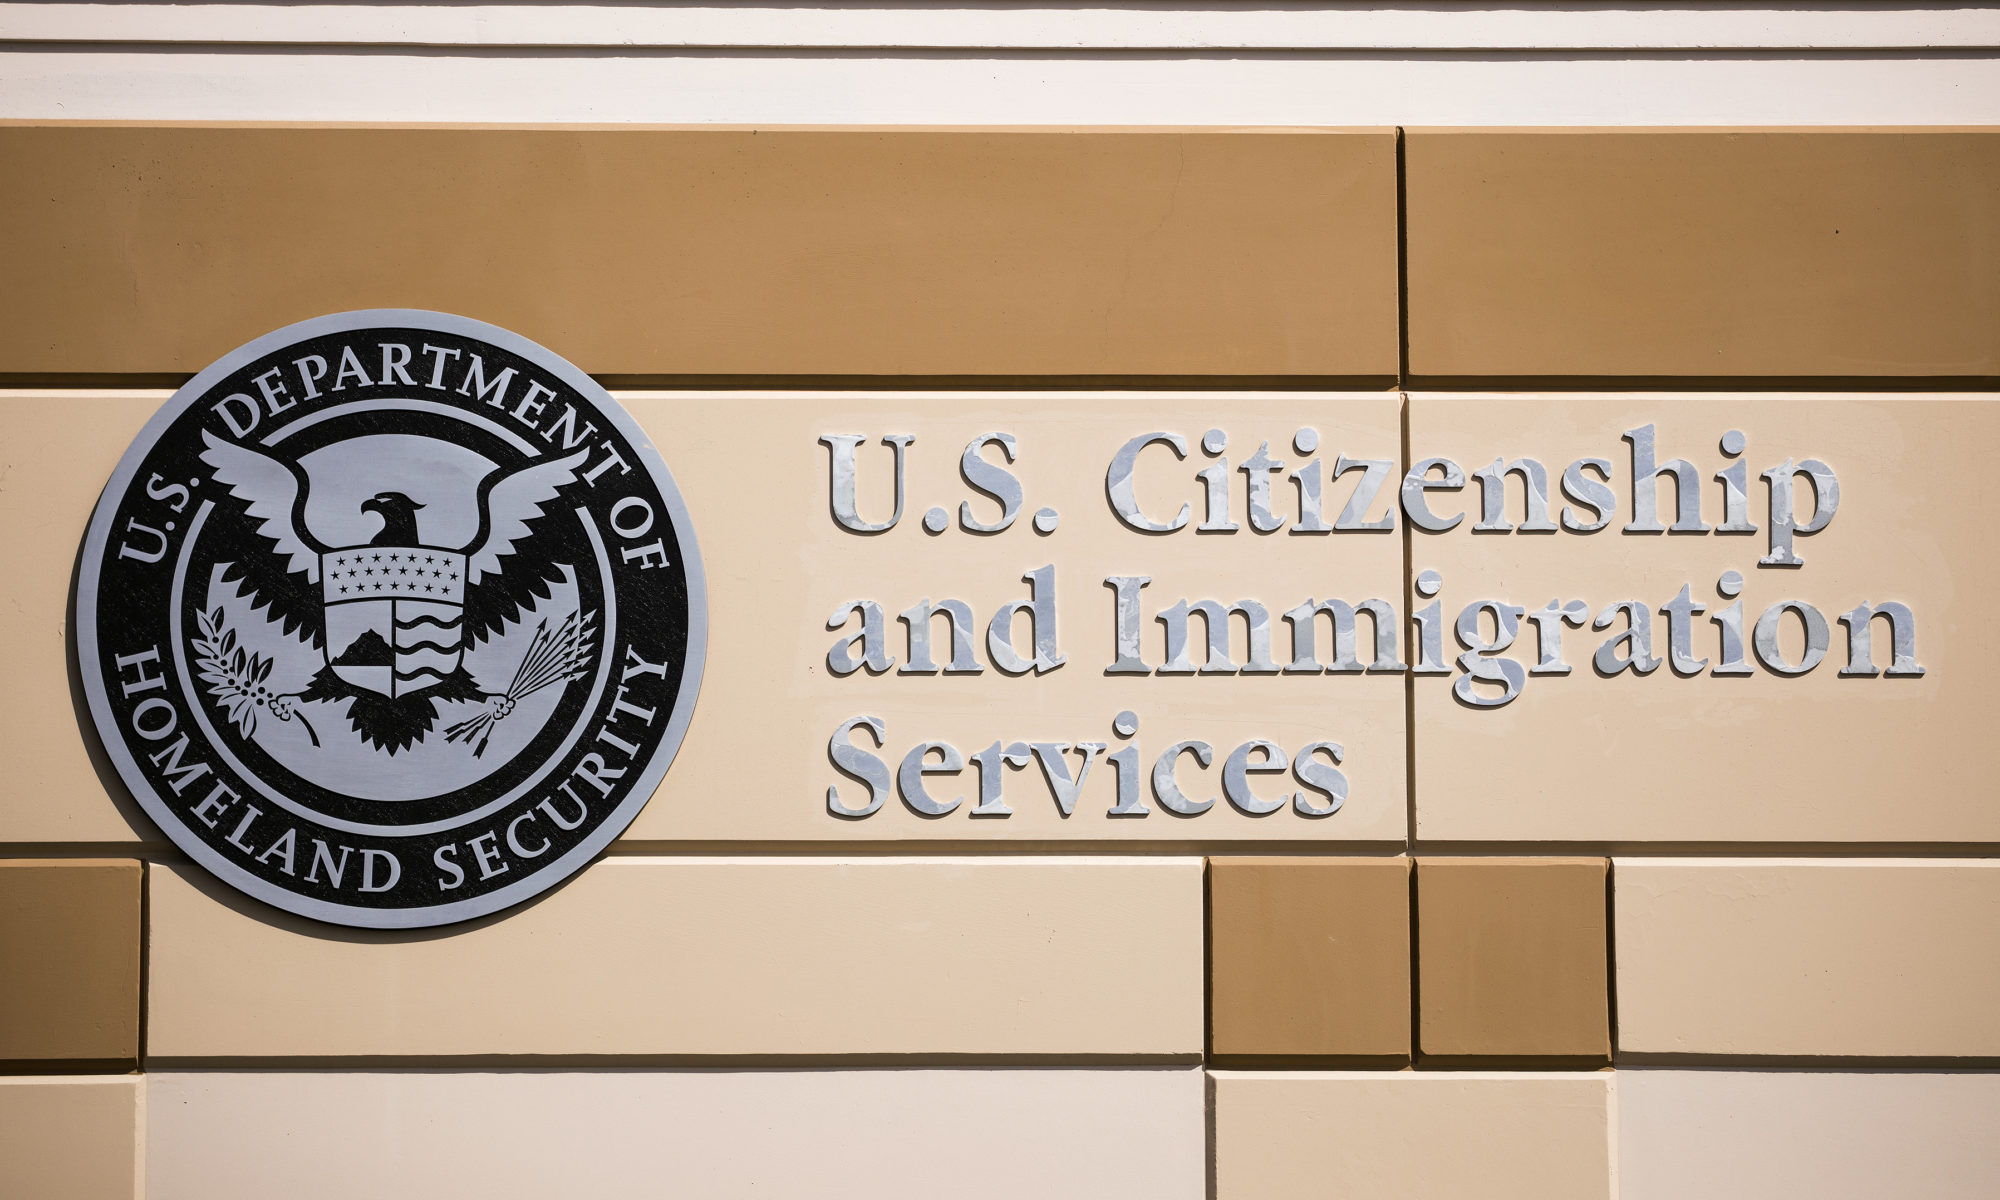 Emblem at a U.S. Citizenship and Immigration Services building